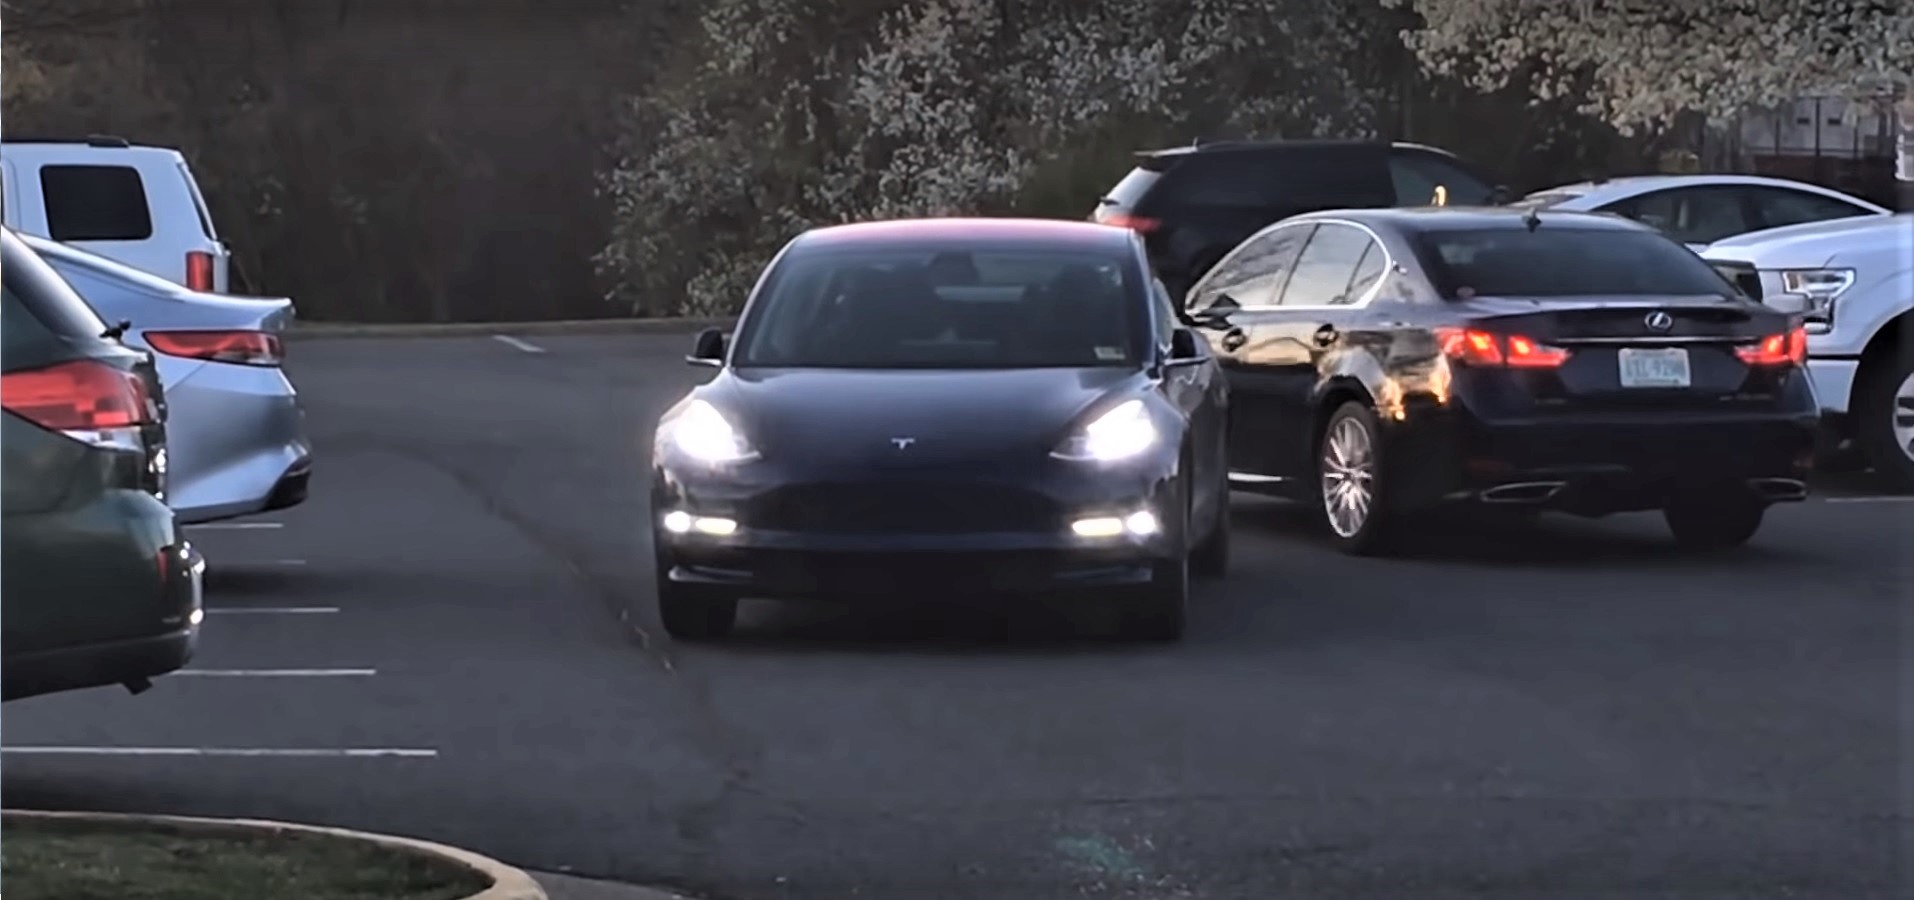 Tesla Model 3 using Enhanced Summon faces human driver in parking lot showdown